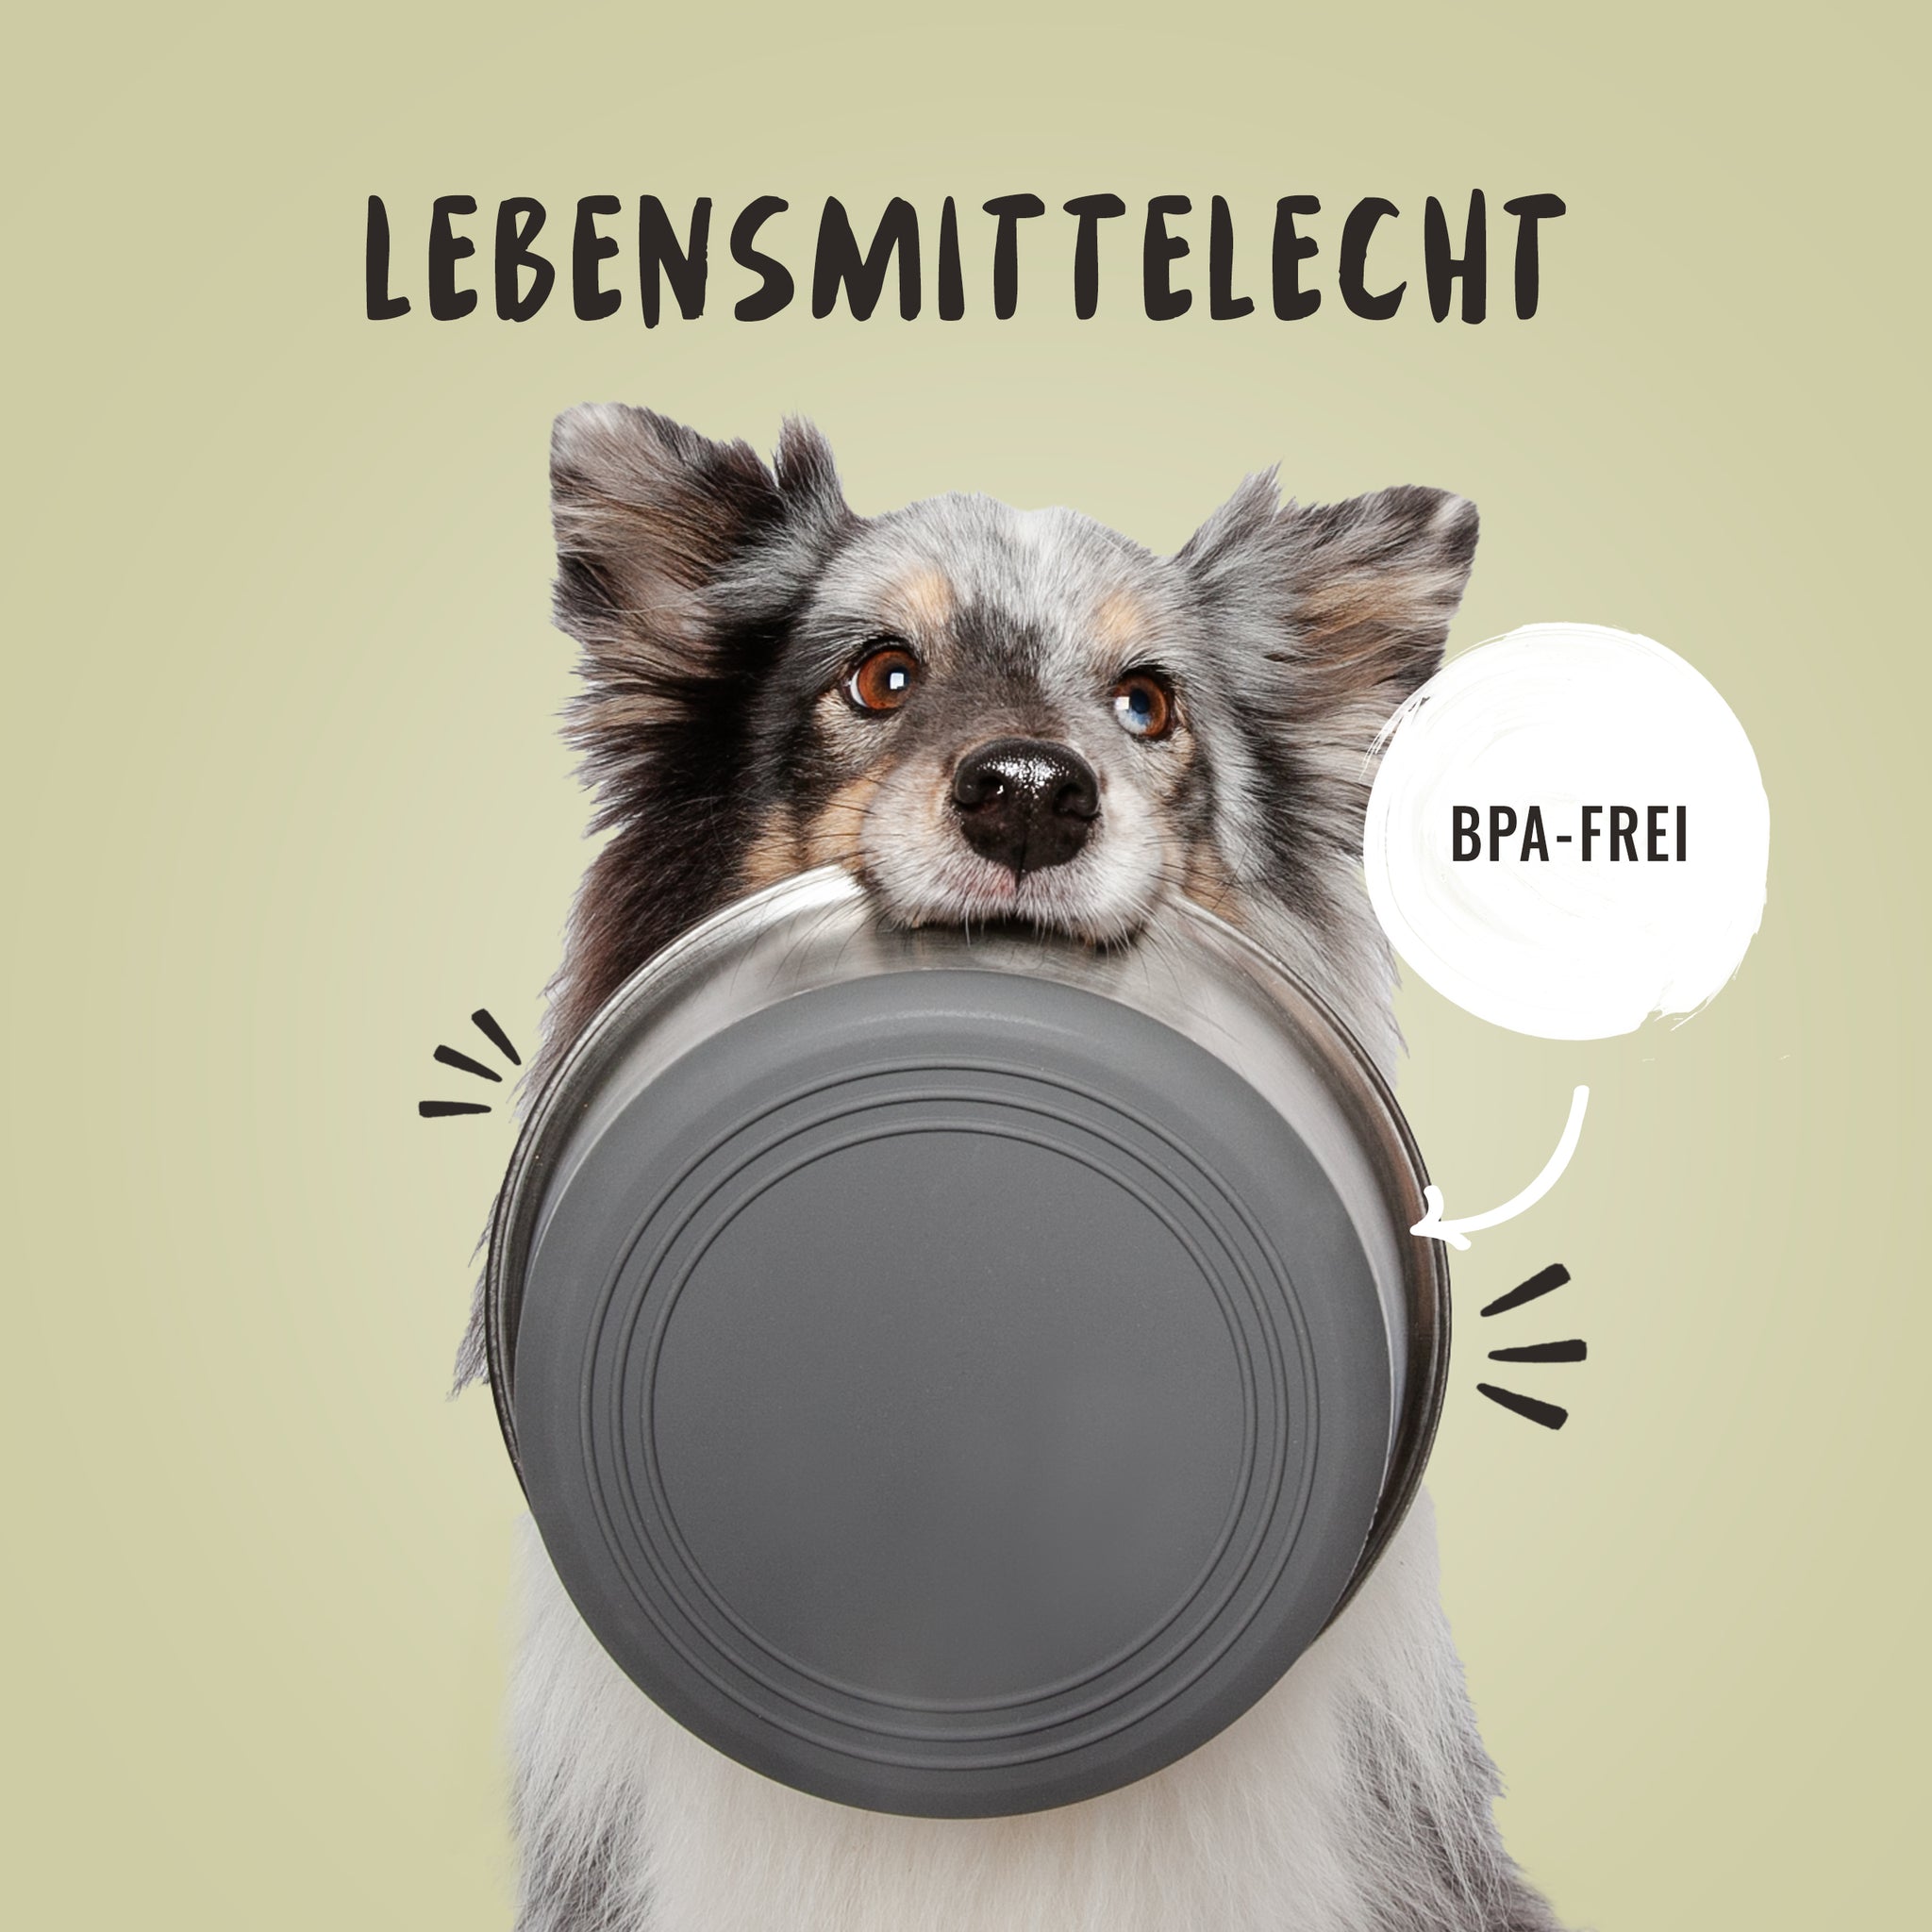 Edelstahl Futternapf für Hundefutter oder Katzenfutter ist BPA-frei